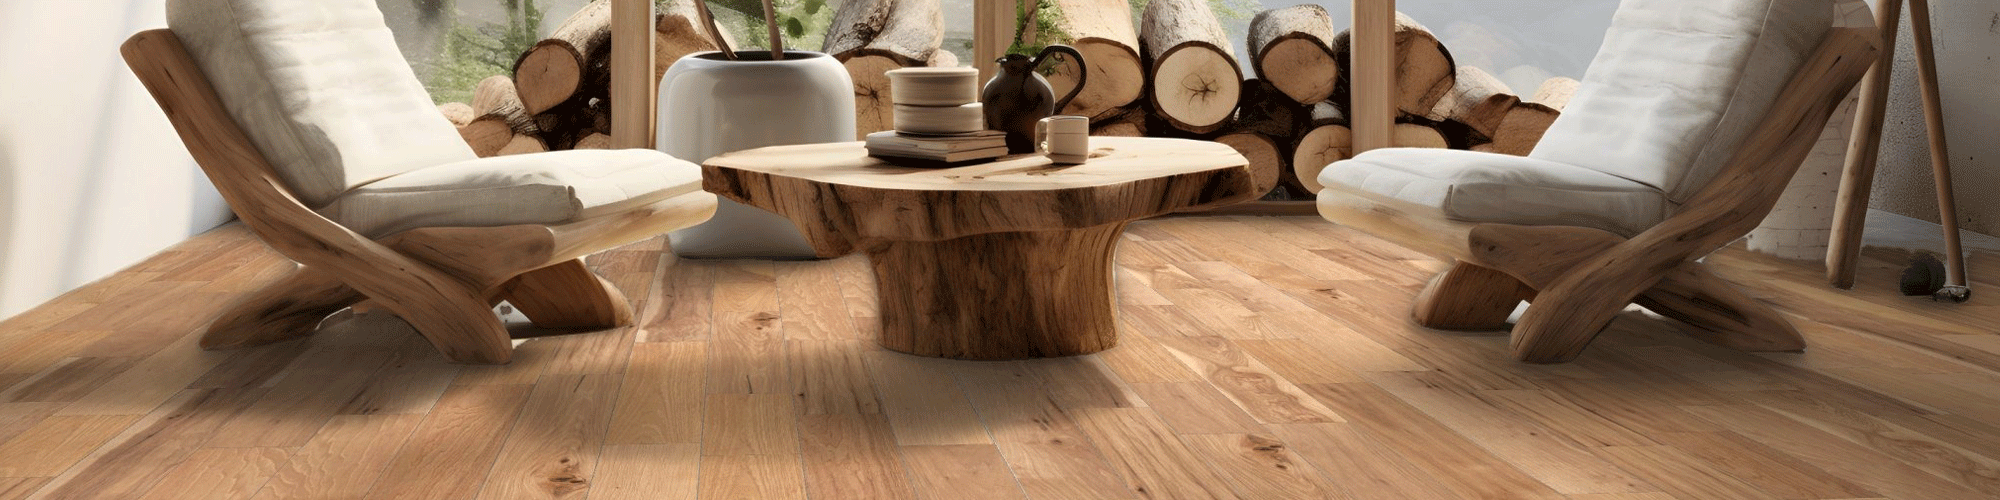 Unfinished Solid Hardwood in Red Oak, White Oak, Hickory Flooring